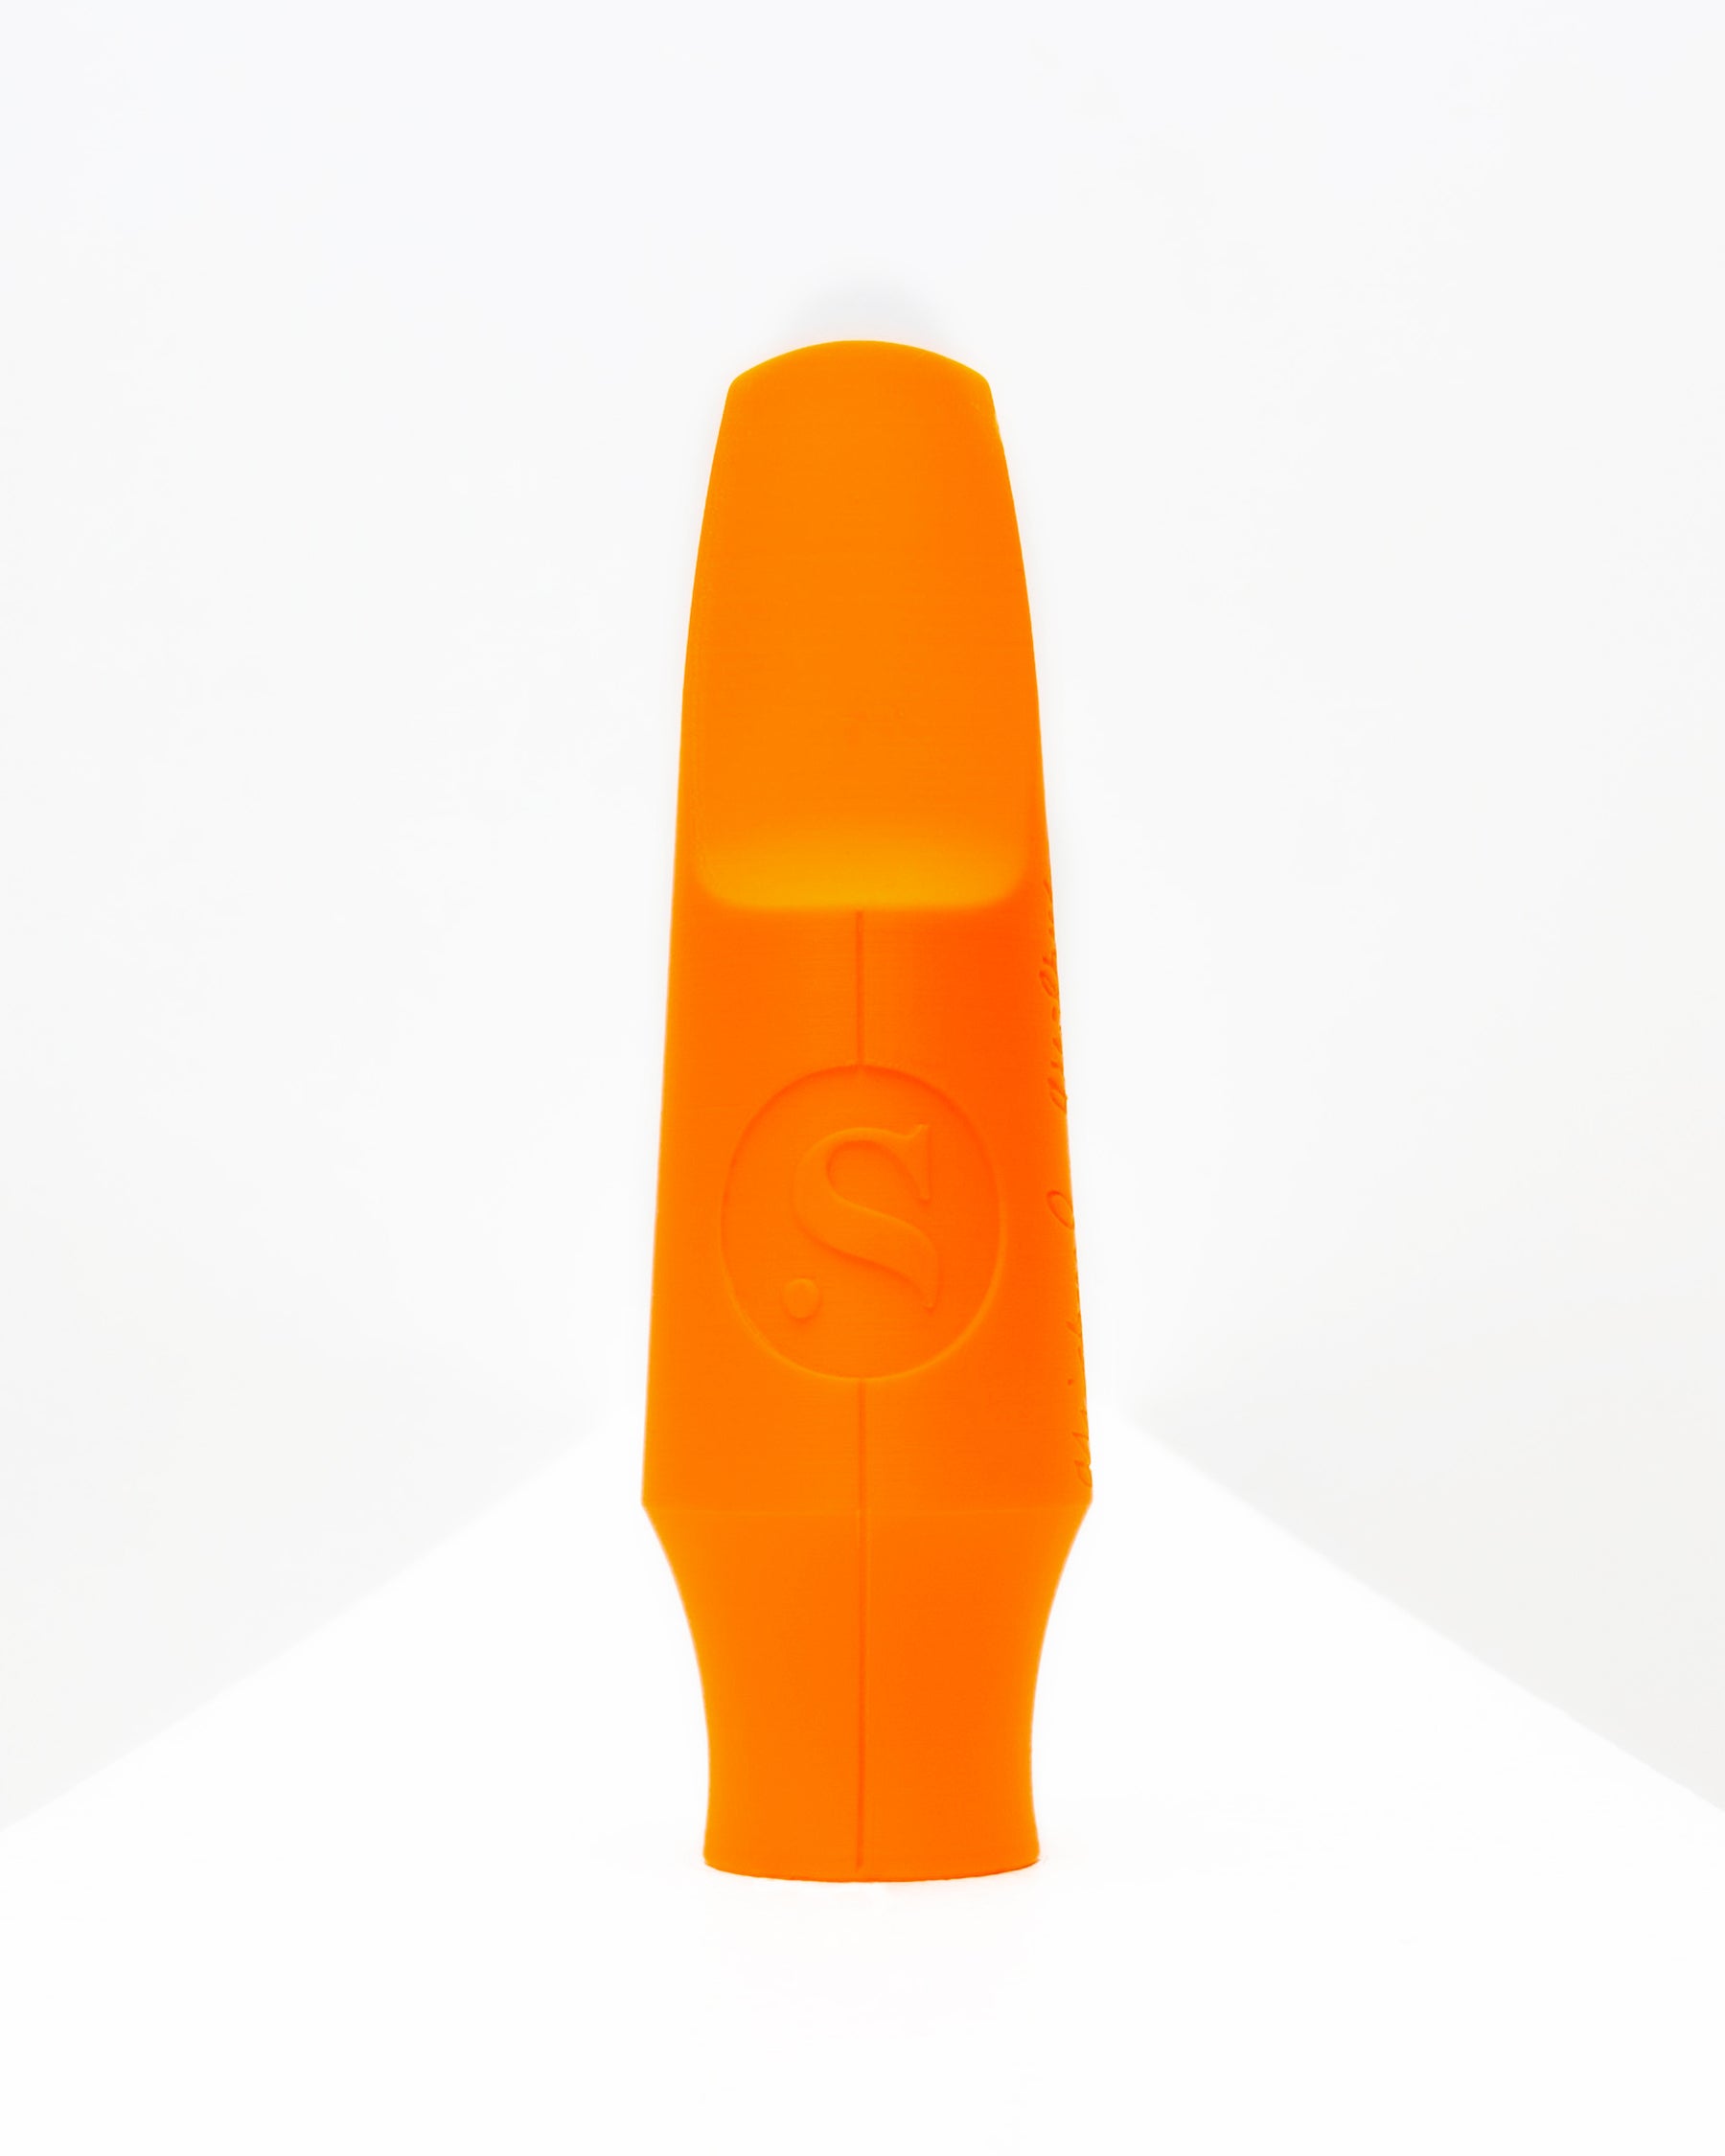 Tenor Signature Saxophone mouthpiece - Dan Forshaw by Syos - 9 / Lava Orange